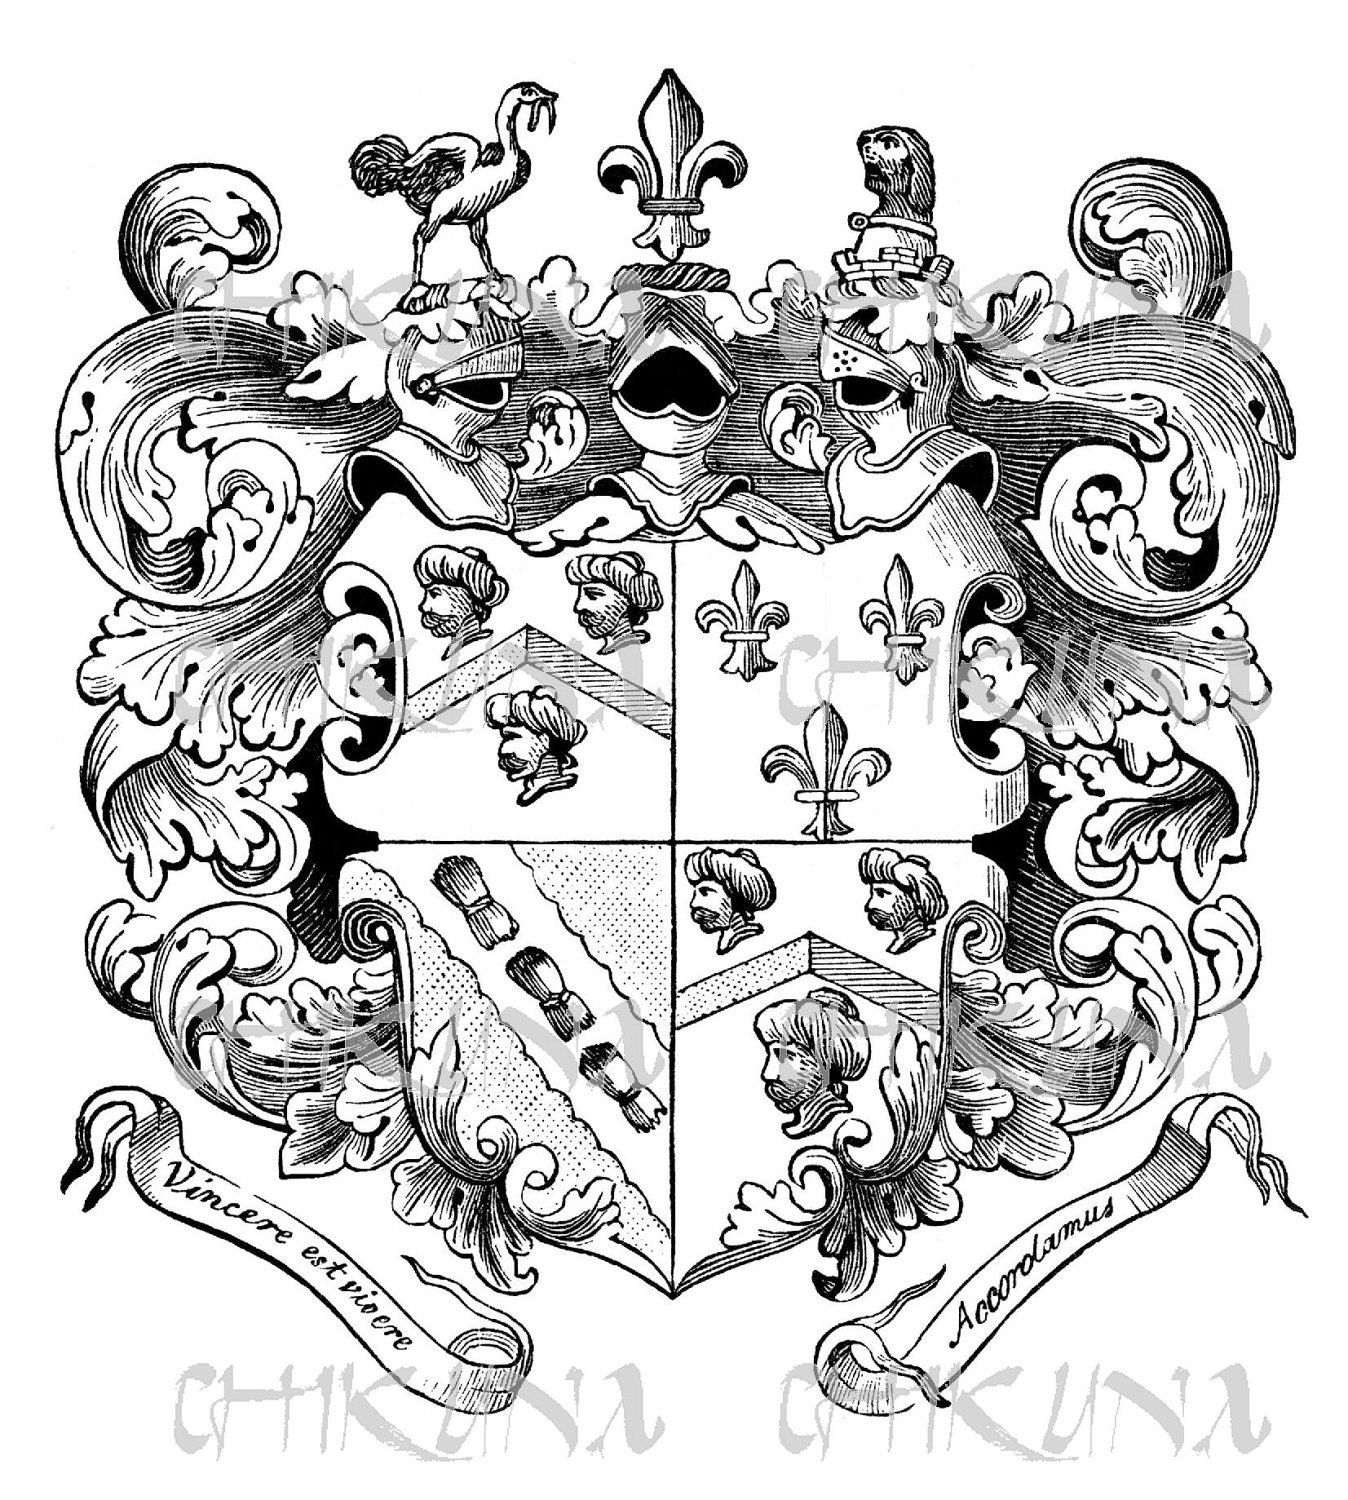 heraldic lily